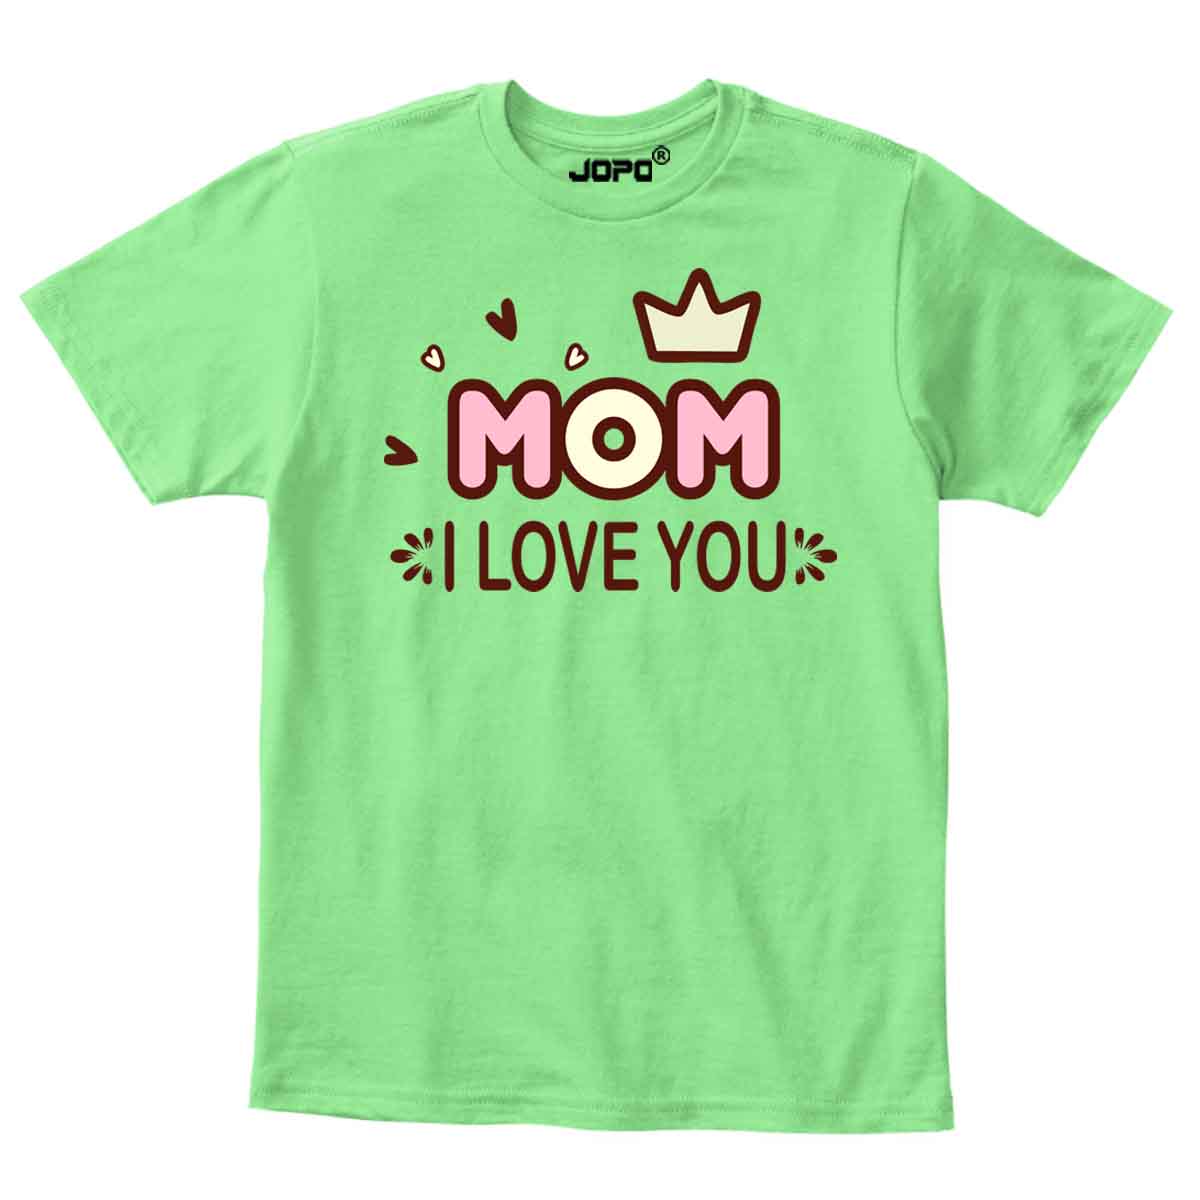 mom Love you mint green